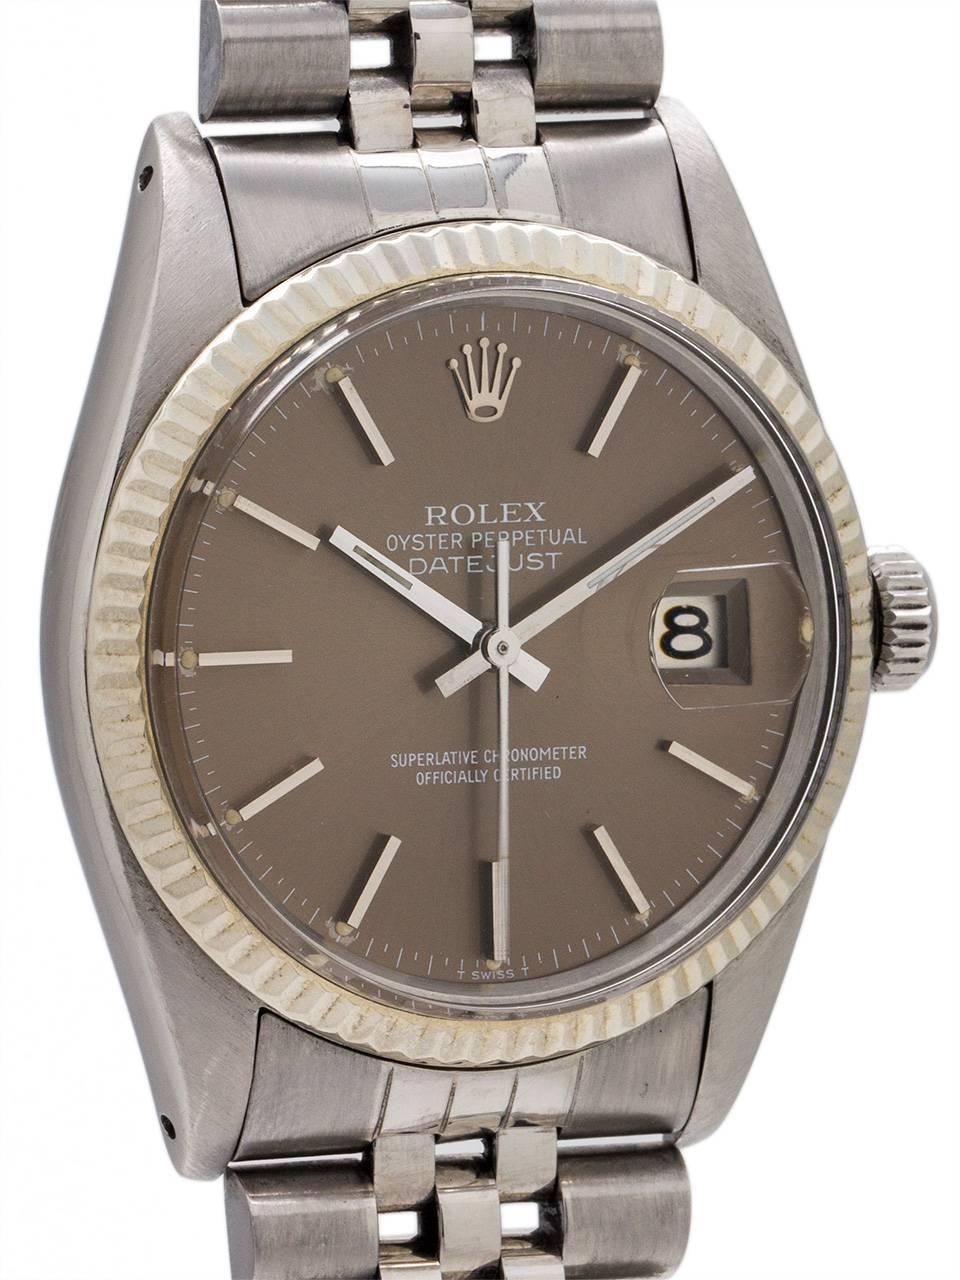 Modern Rolex Stainless Steel Datejust Self Winding Wristwatch Ref 16014 circa 1980